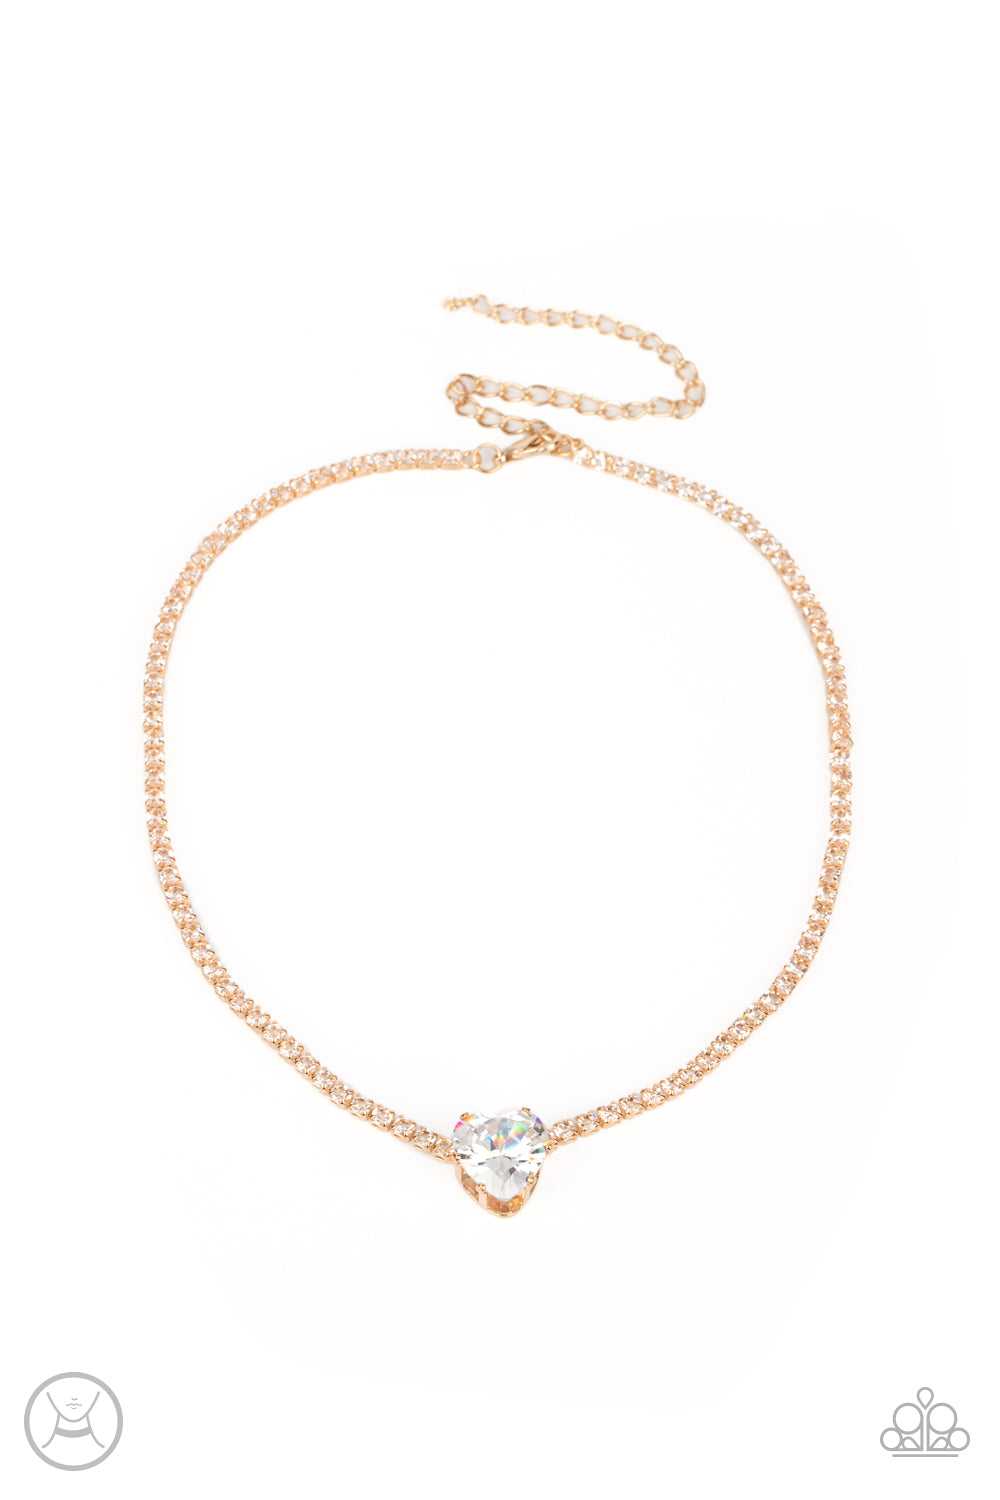 Flirty Fiancé - Gold Fittings & Oversized White Heart Gem Paparazzi Necklace & matching earrings